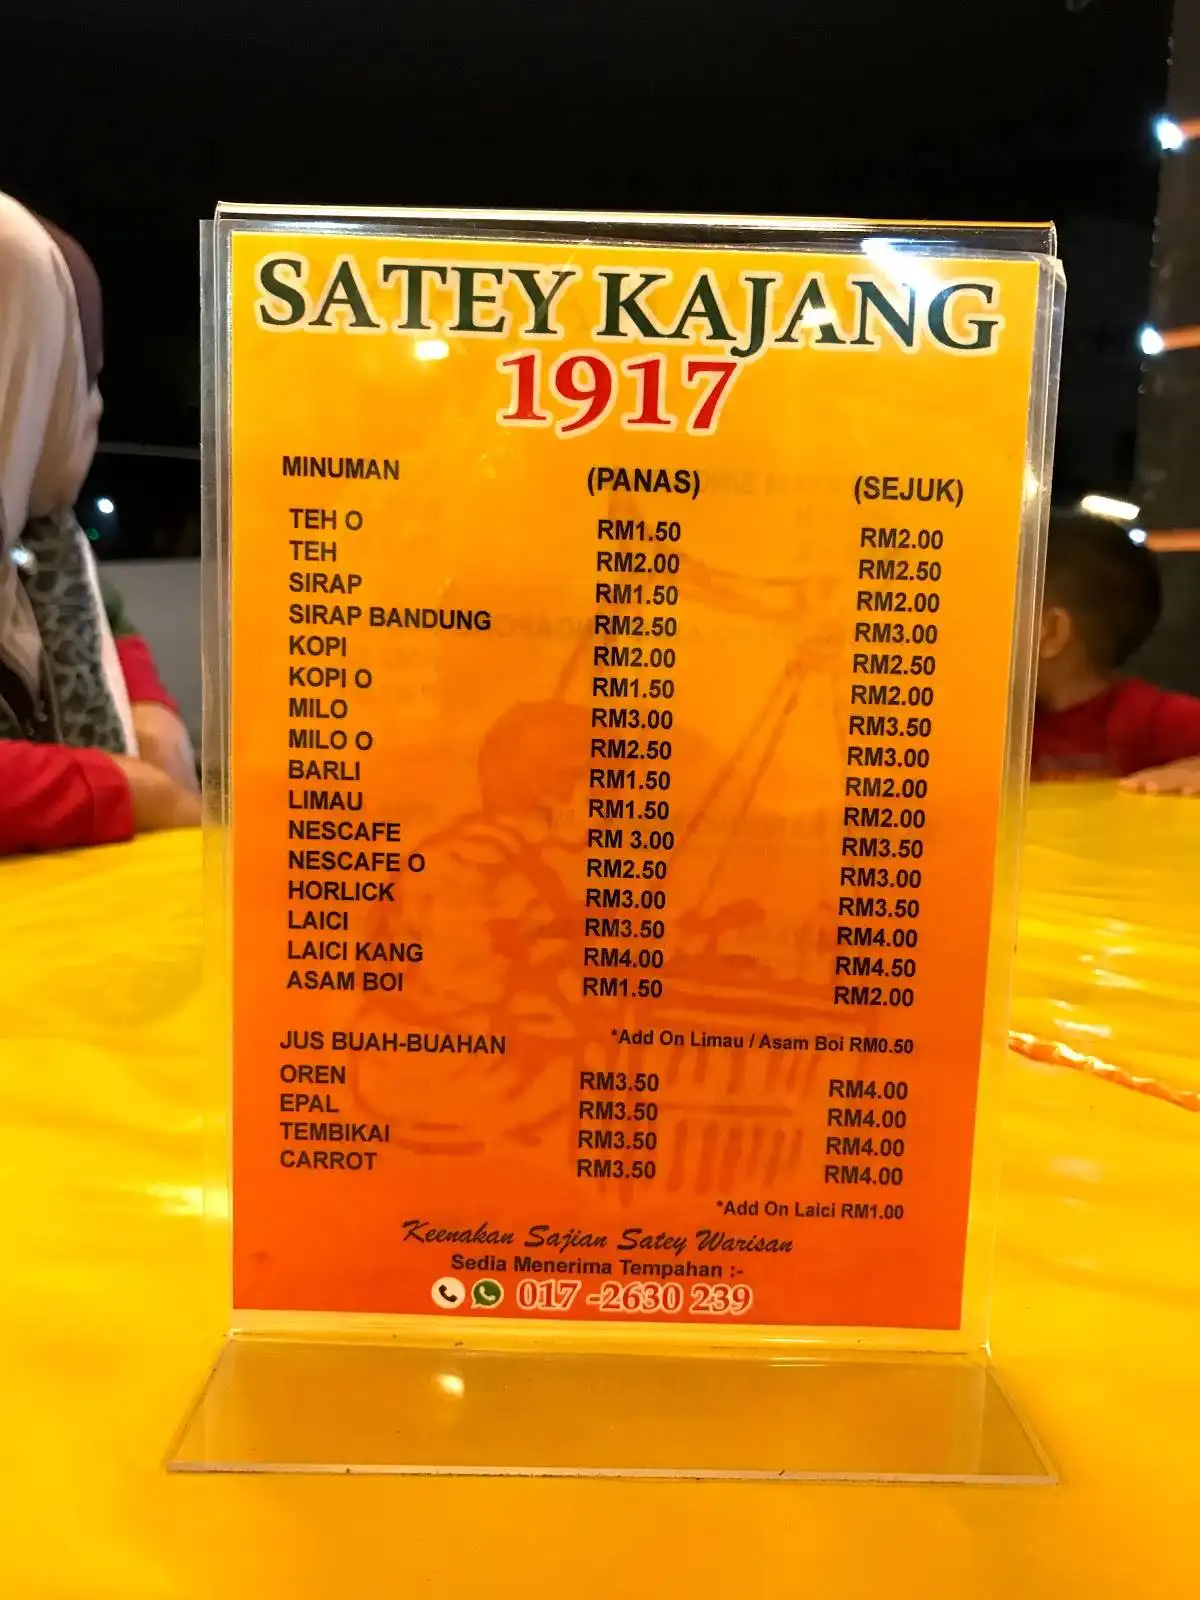 Satey Kajang 1917 Senawang